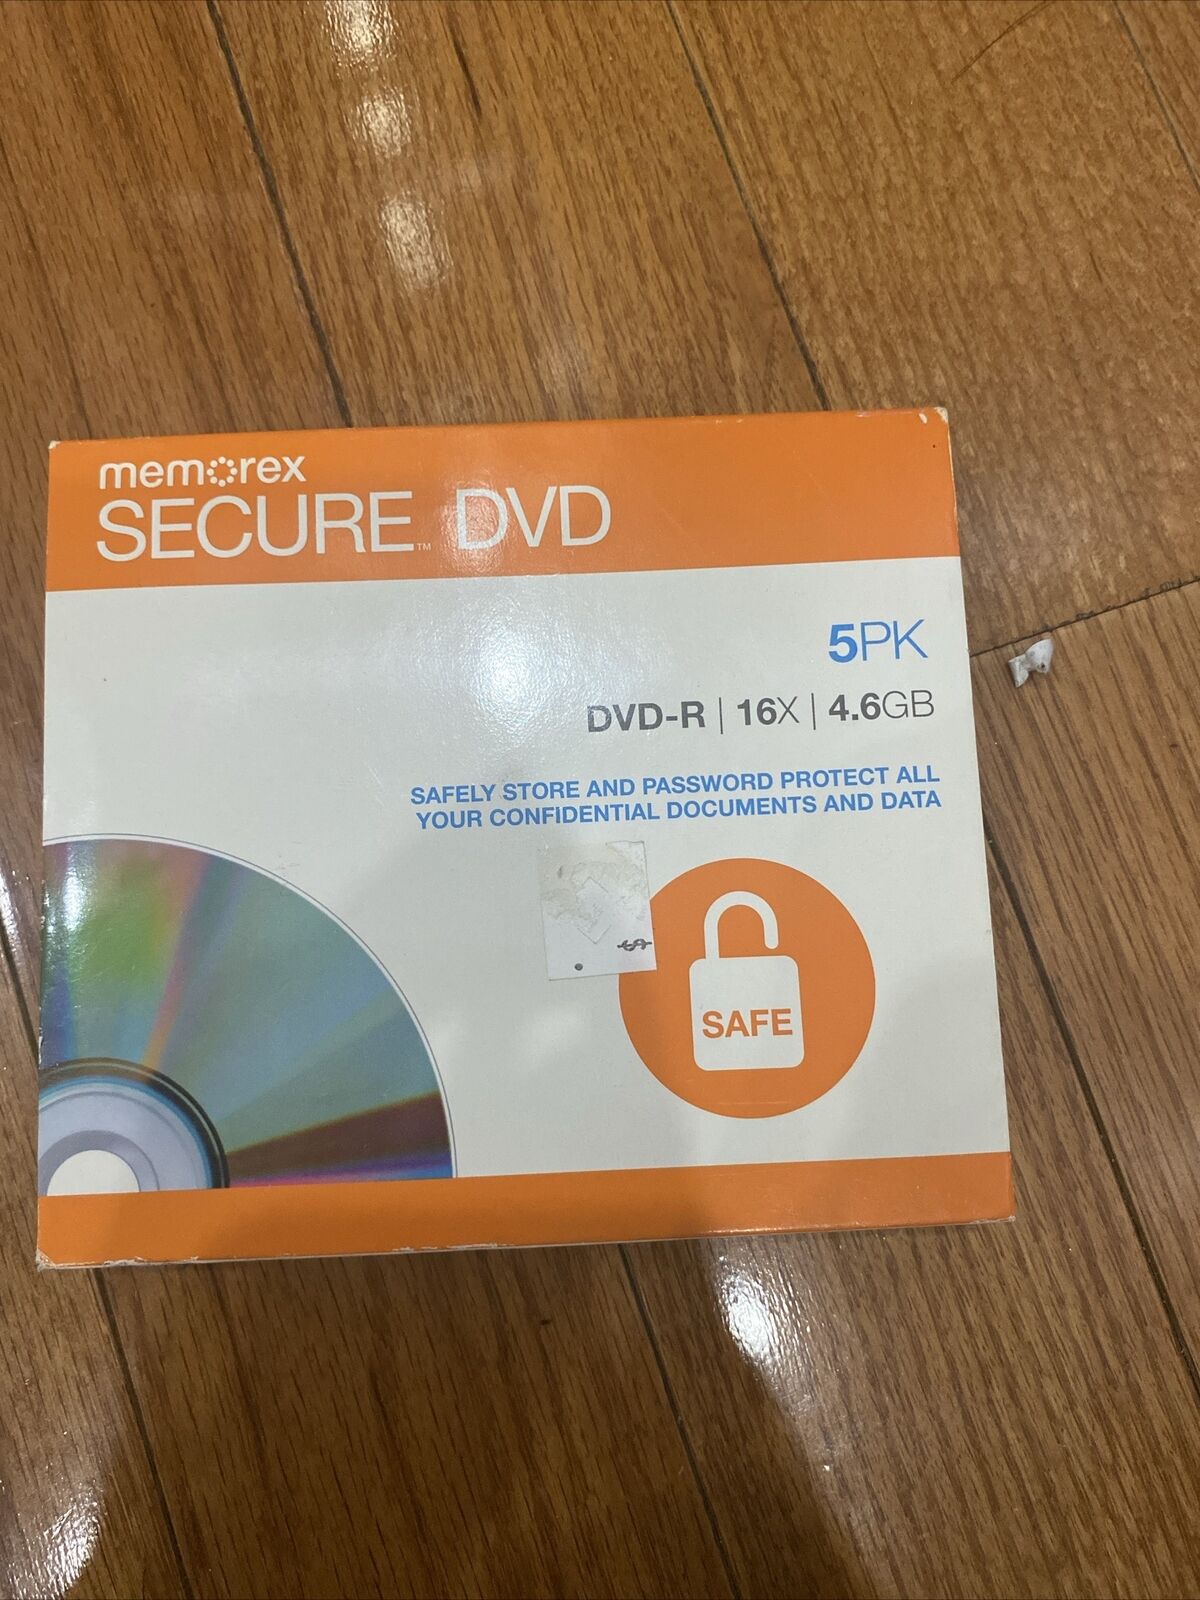 Memorex 5PK Secure DVD Password Protected Encryption 4.6GB AES 256 Bit 98967